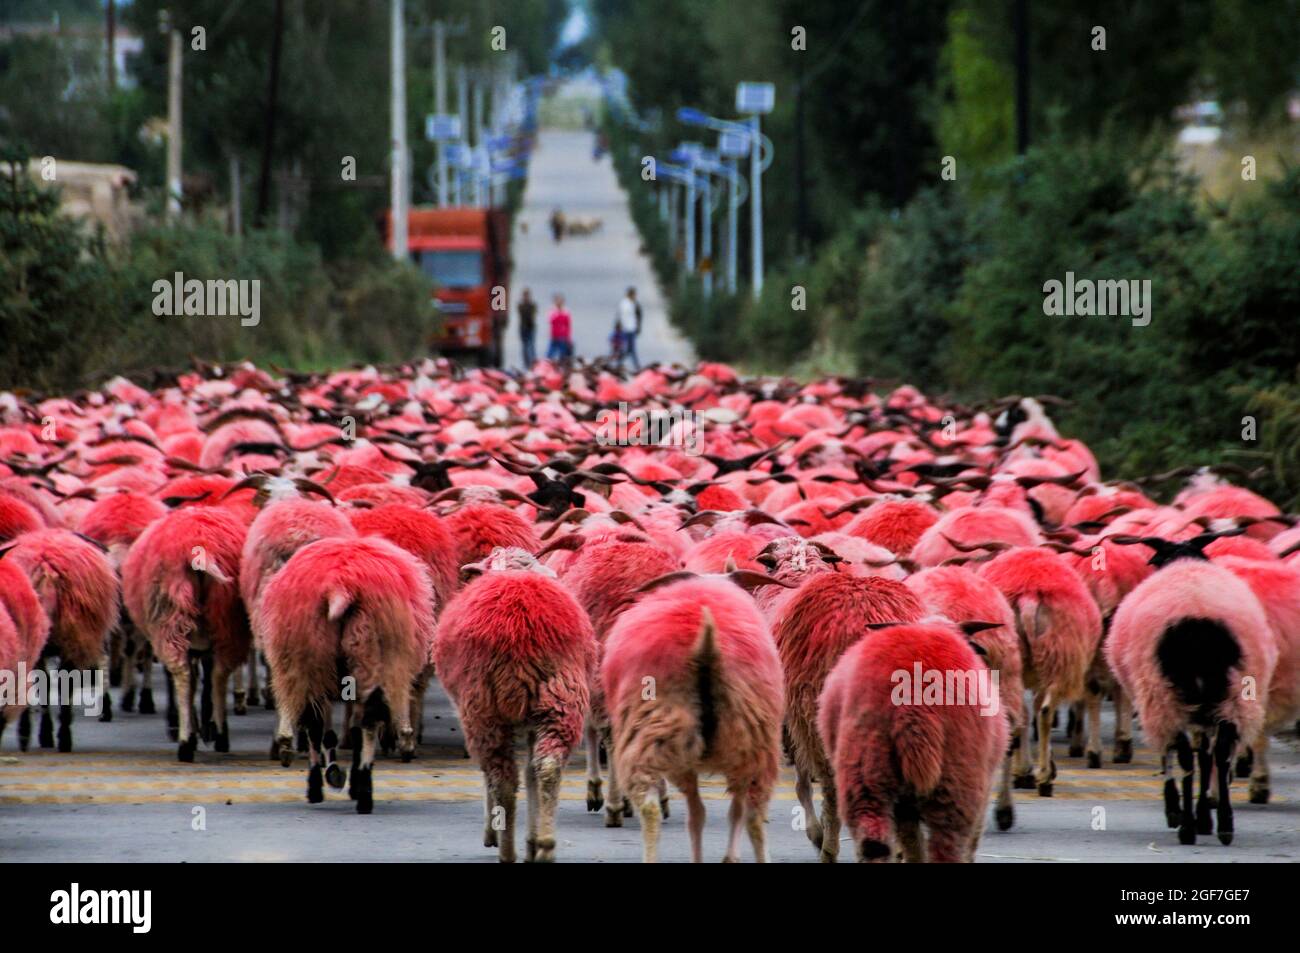 Herd of lamb ian Huanan province China Stock Photo